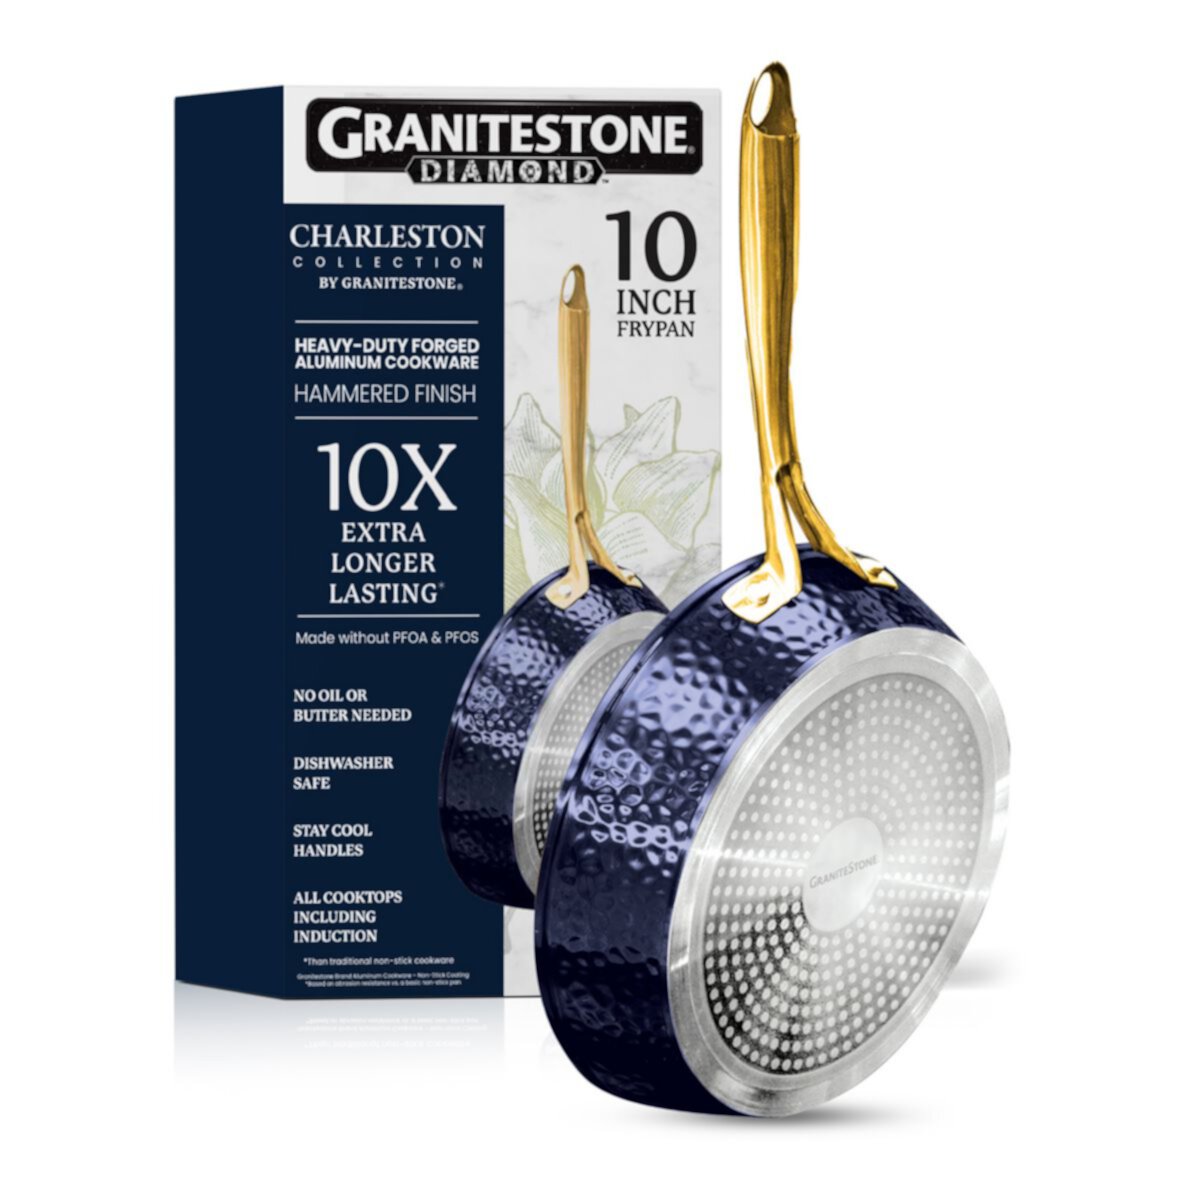 Коллекция Granitestone Diamond Charleston Collection 10-дюймовая кованая сковорода с антипригарным покрытием Granite Stone Diamond